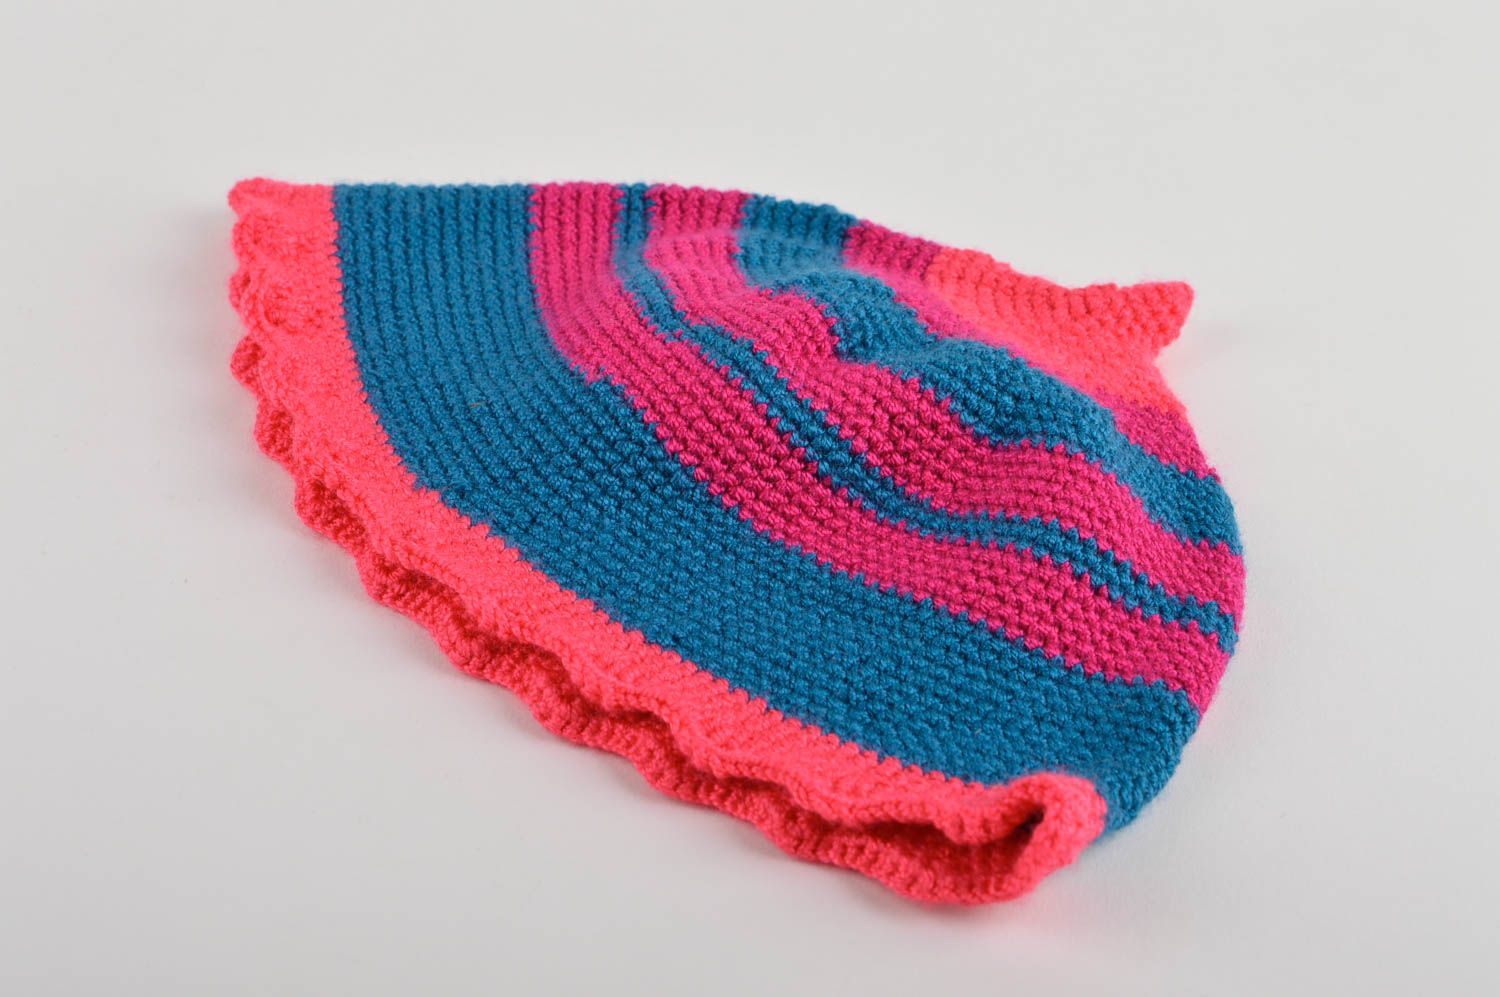 Handmade hat designer hat knitted hat crocheted hat warm hat gift for baby photo 4